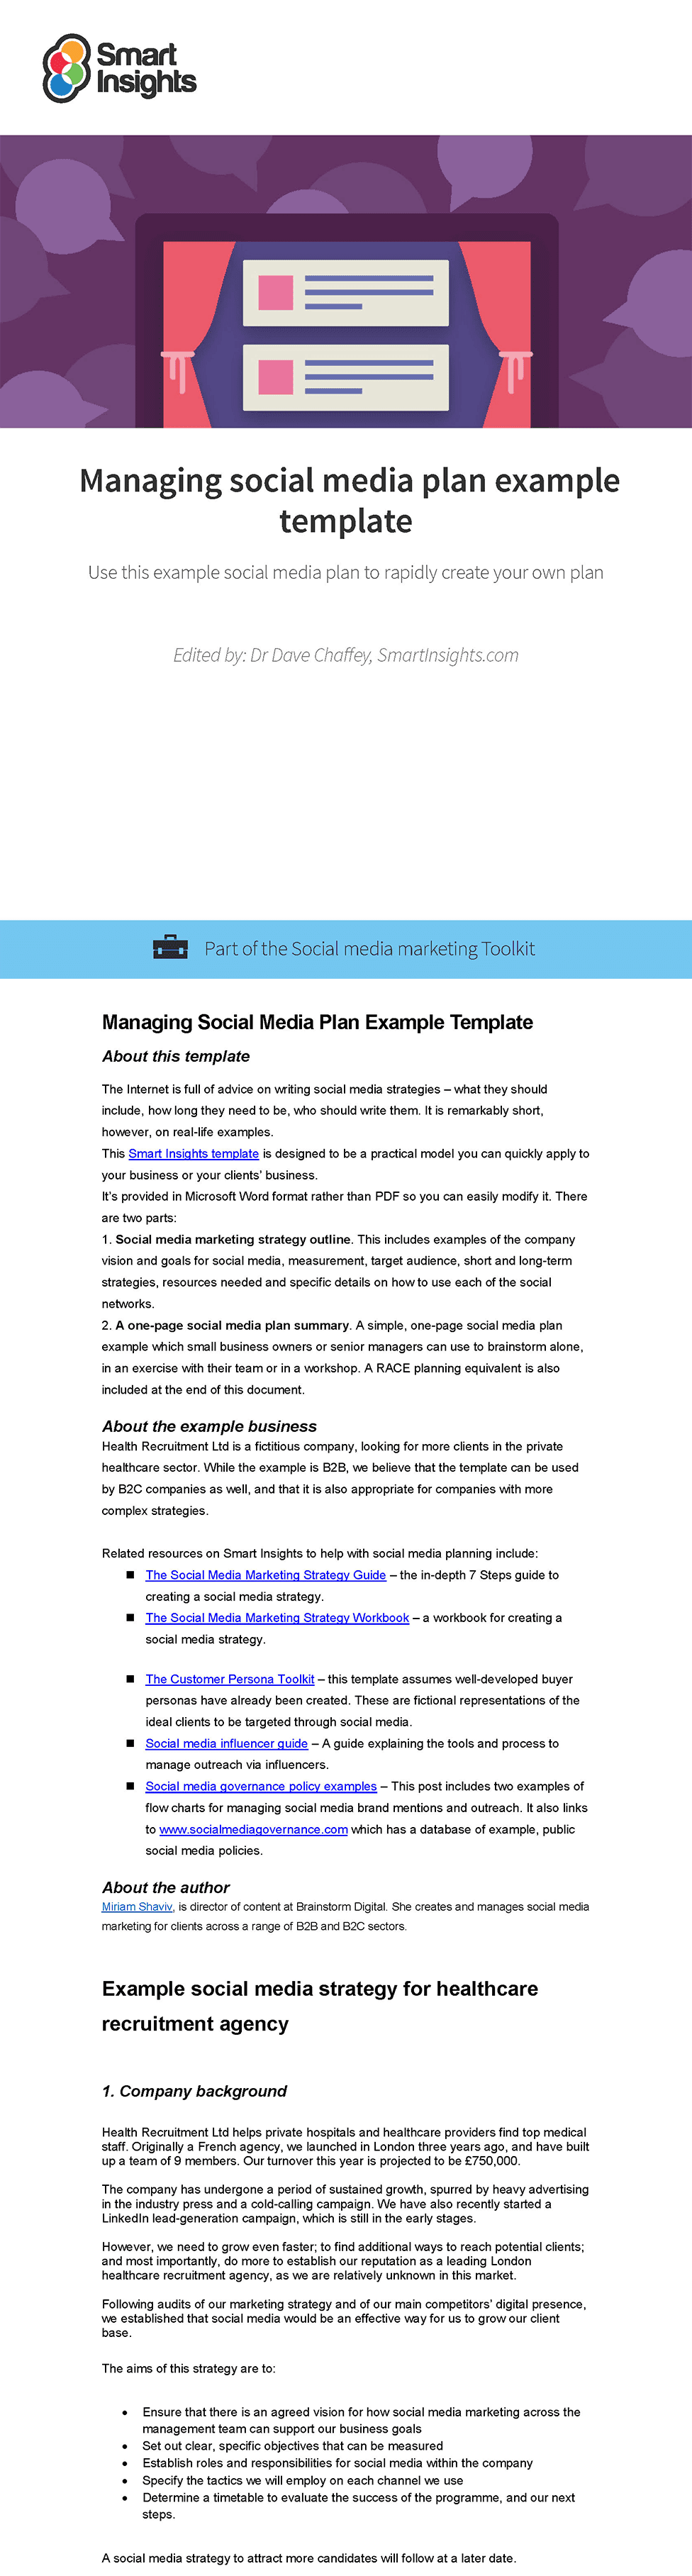 Managing social media plan example template  Smart Insights Pertaining To Social Media Marketing Business Plan Template